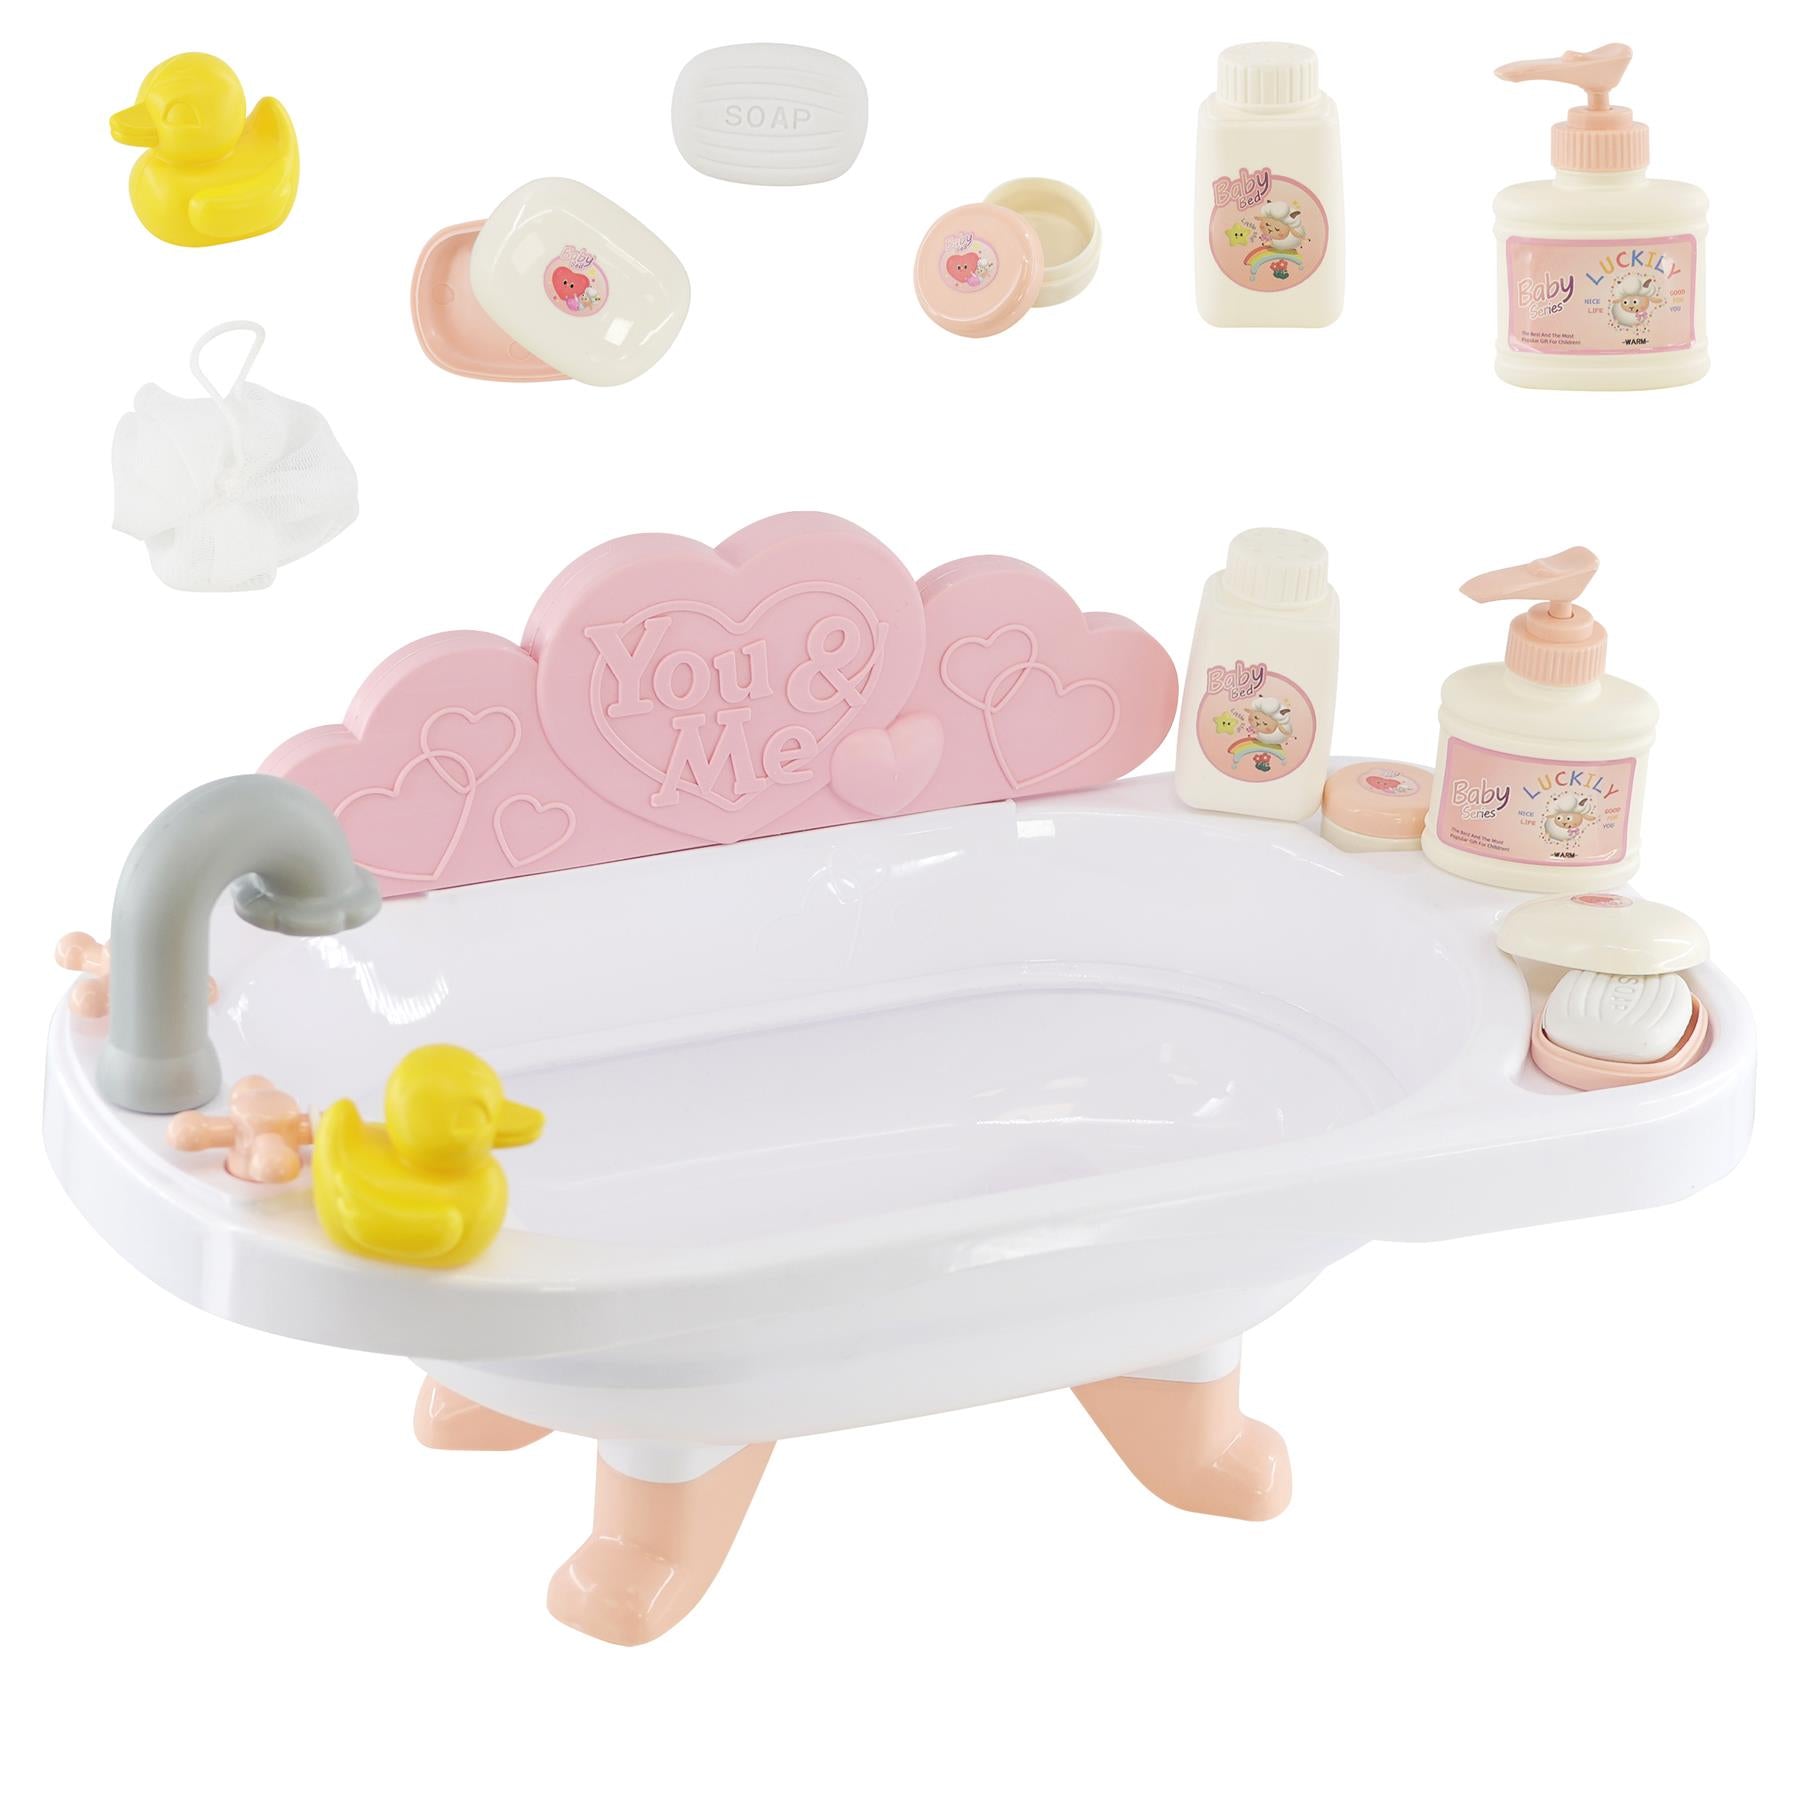 Doll Bath set with Accessories by BiBi Doll - UKBuyZone